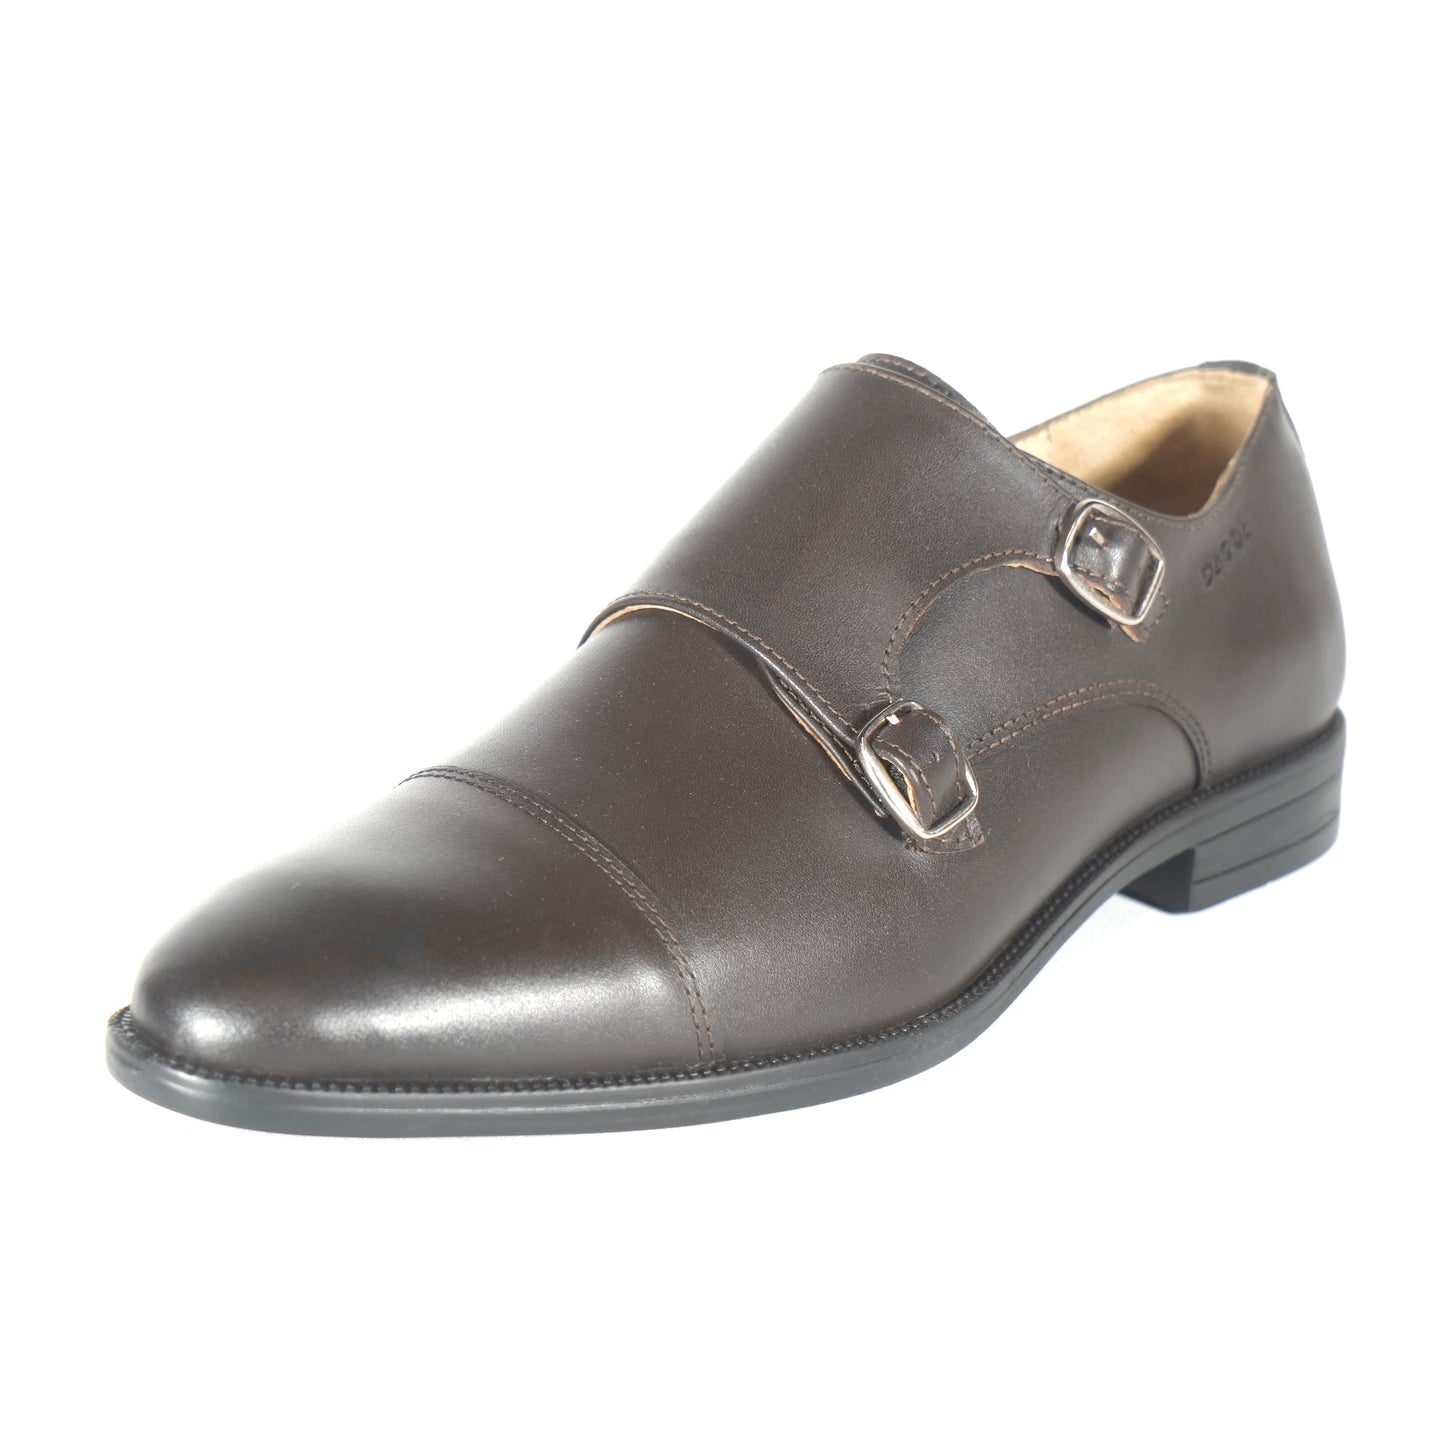 Dagga Men's Black / Brown Double Monk Leather Shoes